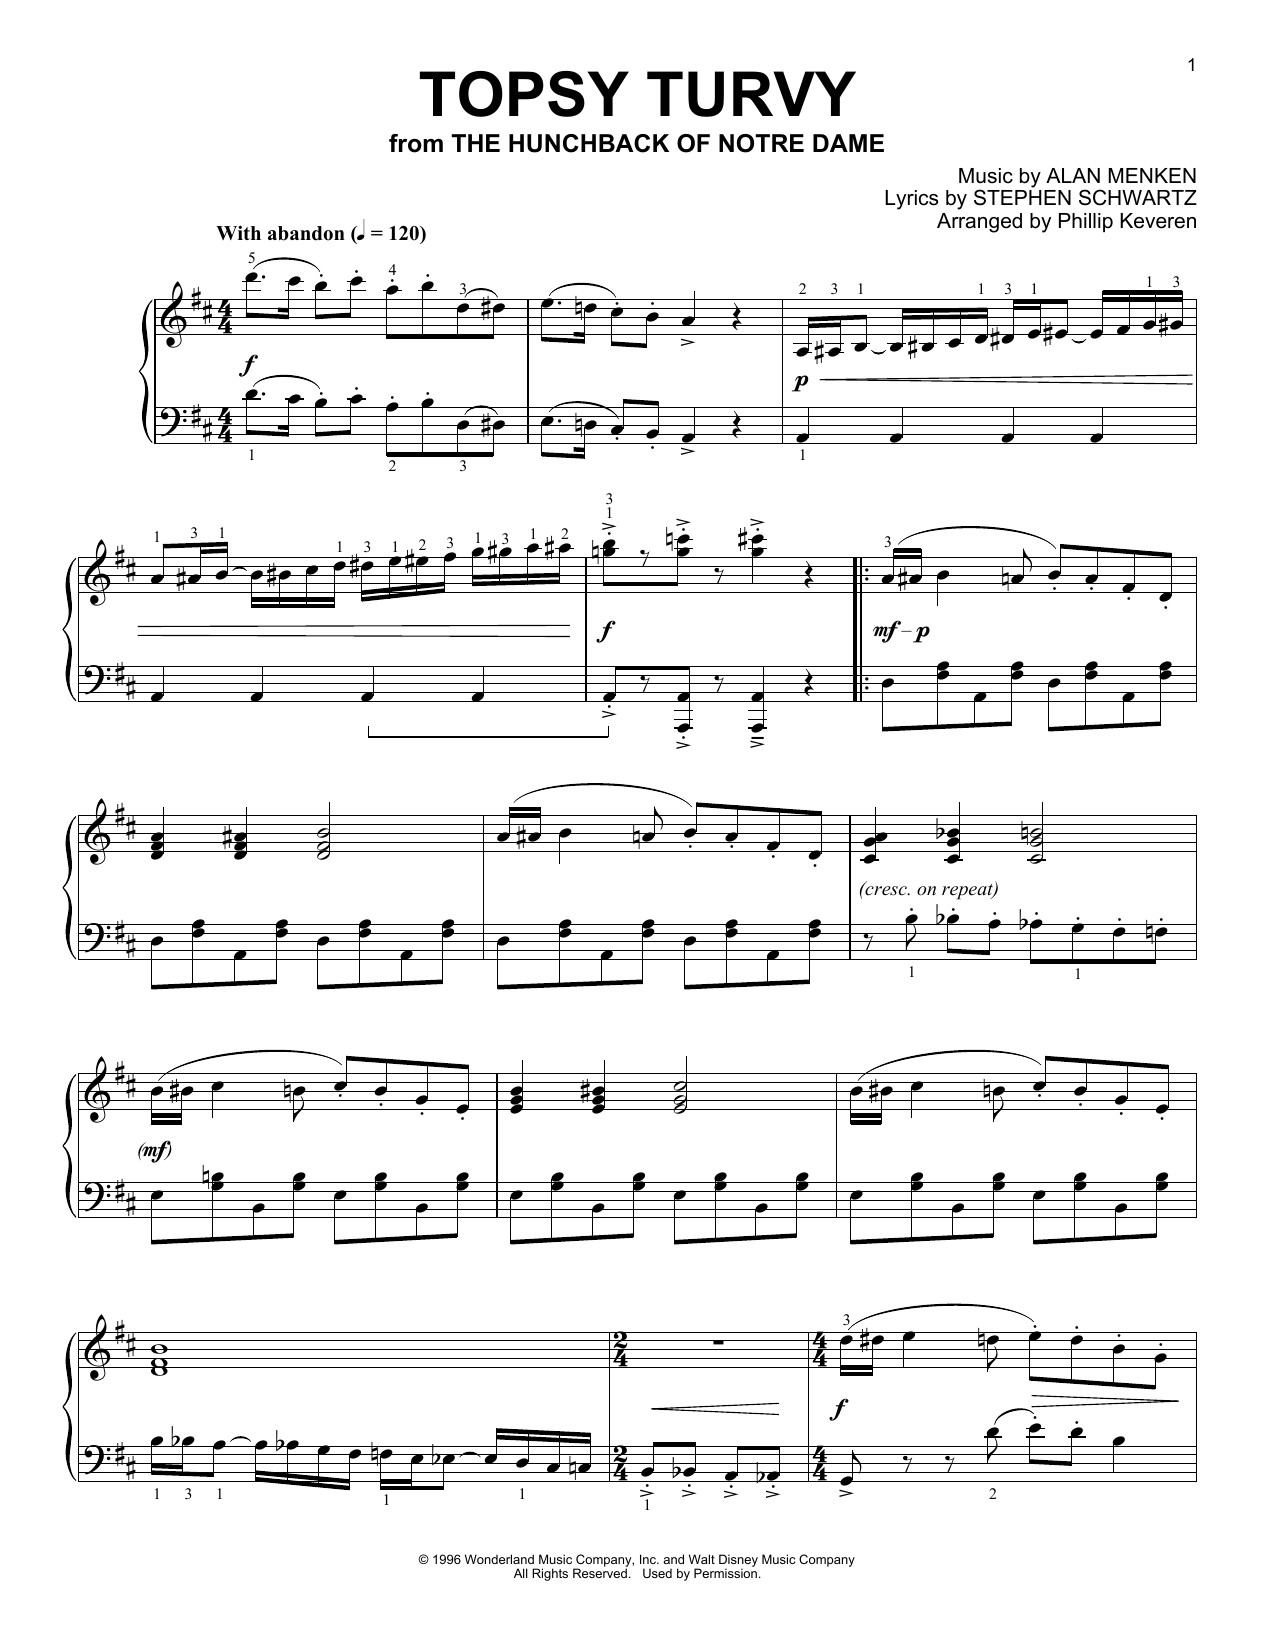 Alan Menken Topsy Turvy [Ragtime version] (arr. Phillip Keveren) Sheet Music Notes & Chords for Piano - Download or Print PDF